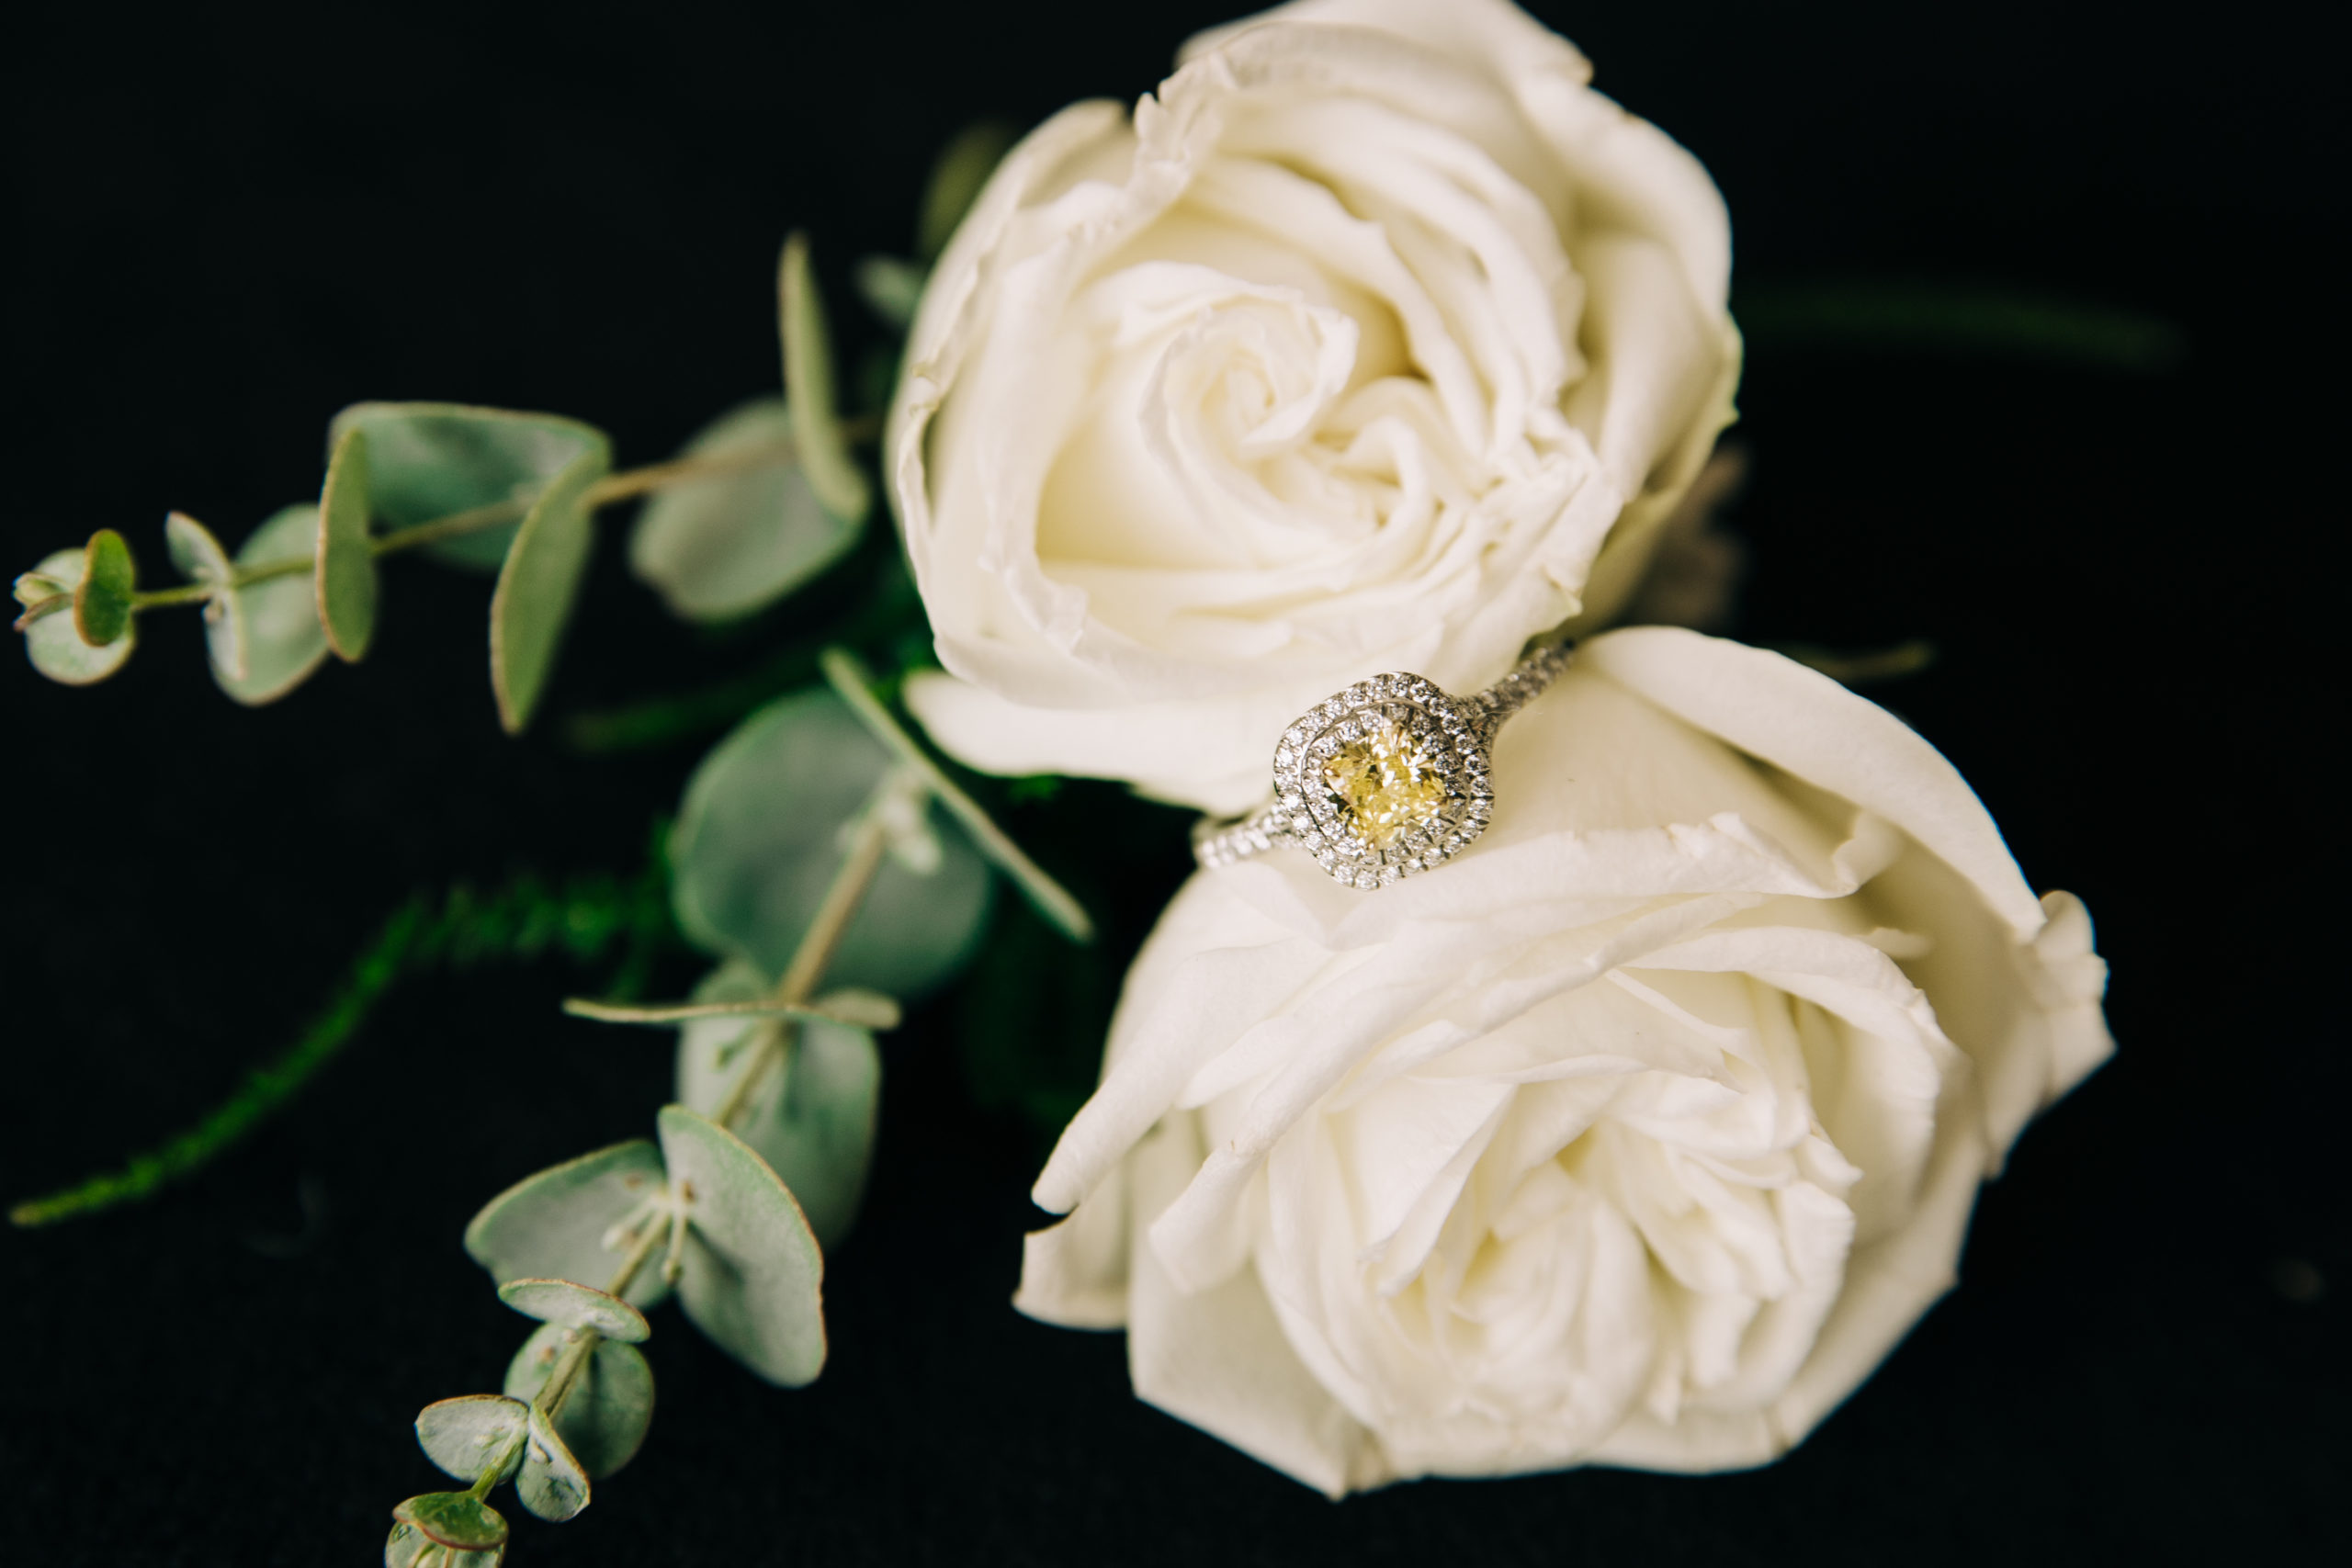 tucson-wedding-photographer---tucson-wedding---tucson-wedding-planning---wedding-planning-tips---tucson-florist---yellow-diamond-ring---boutonneire---wedding-florist